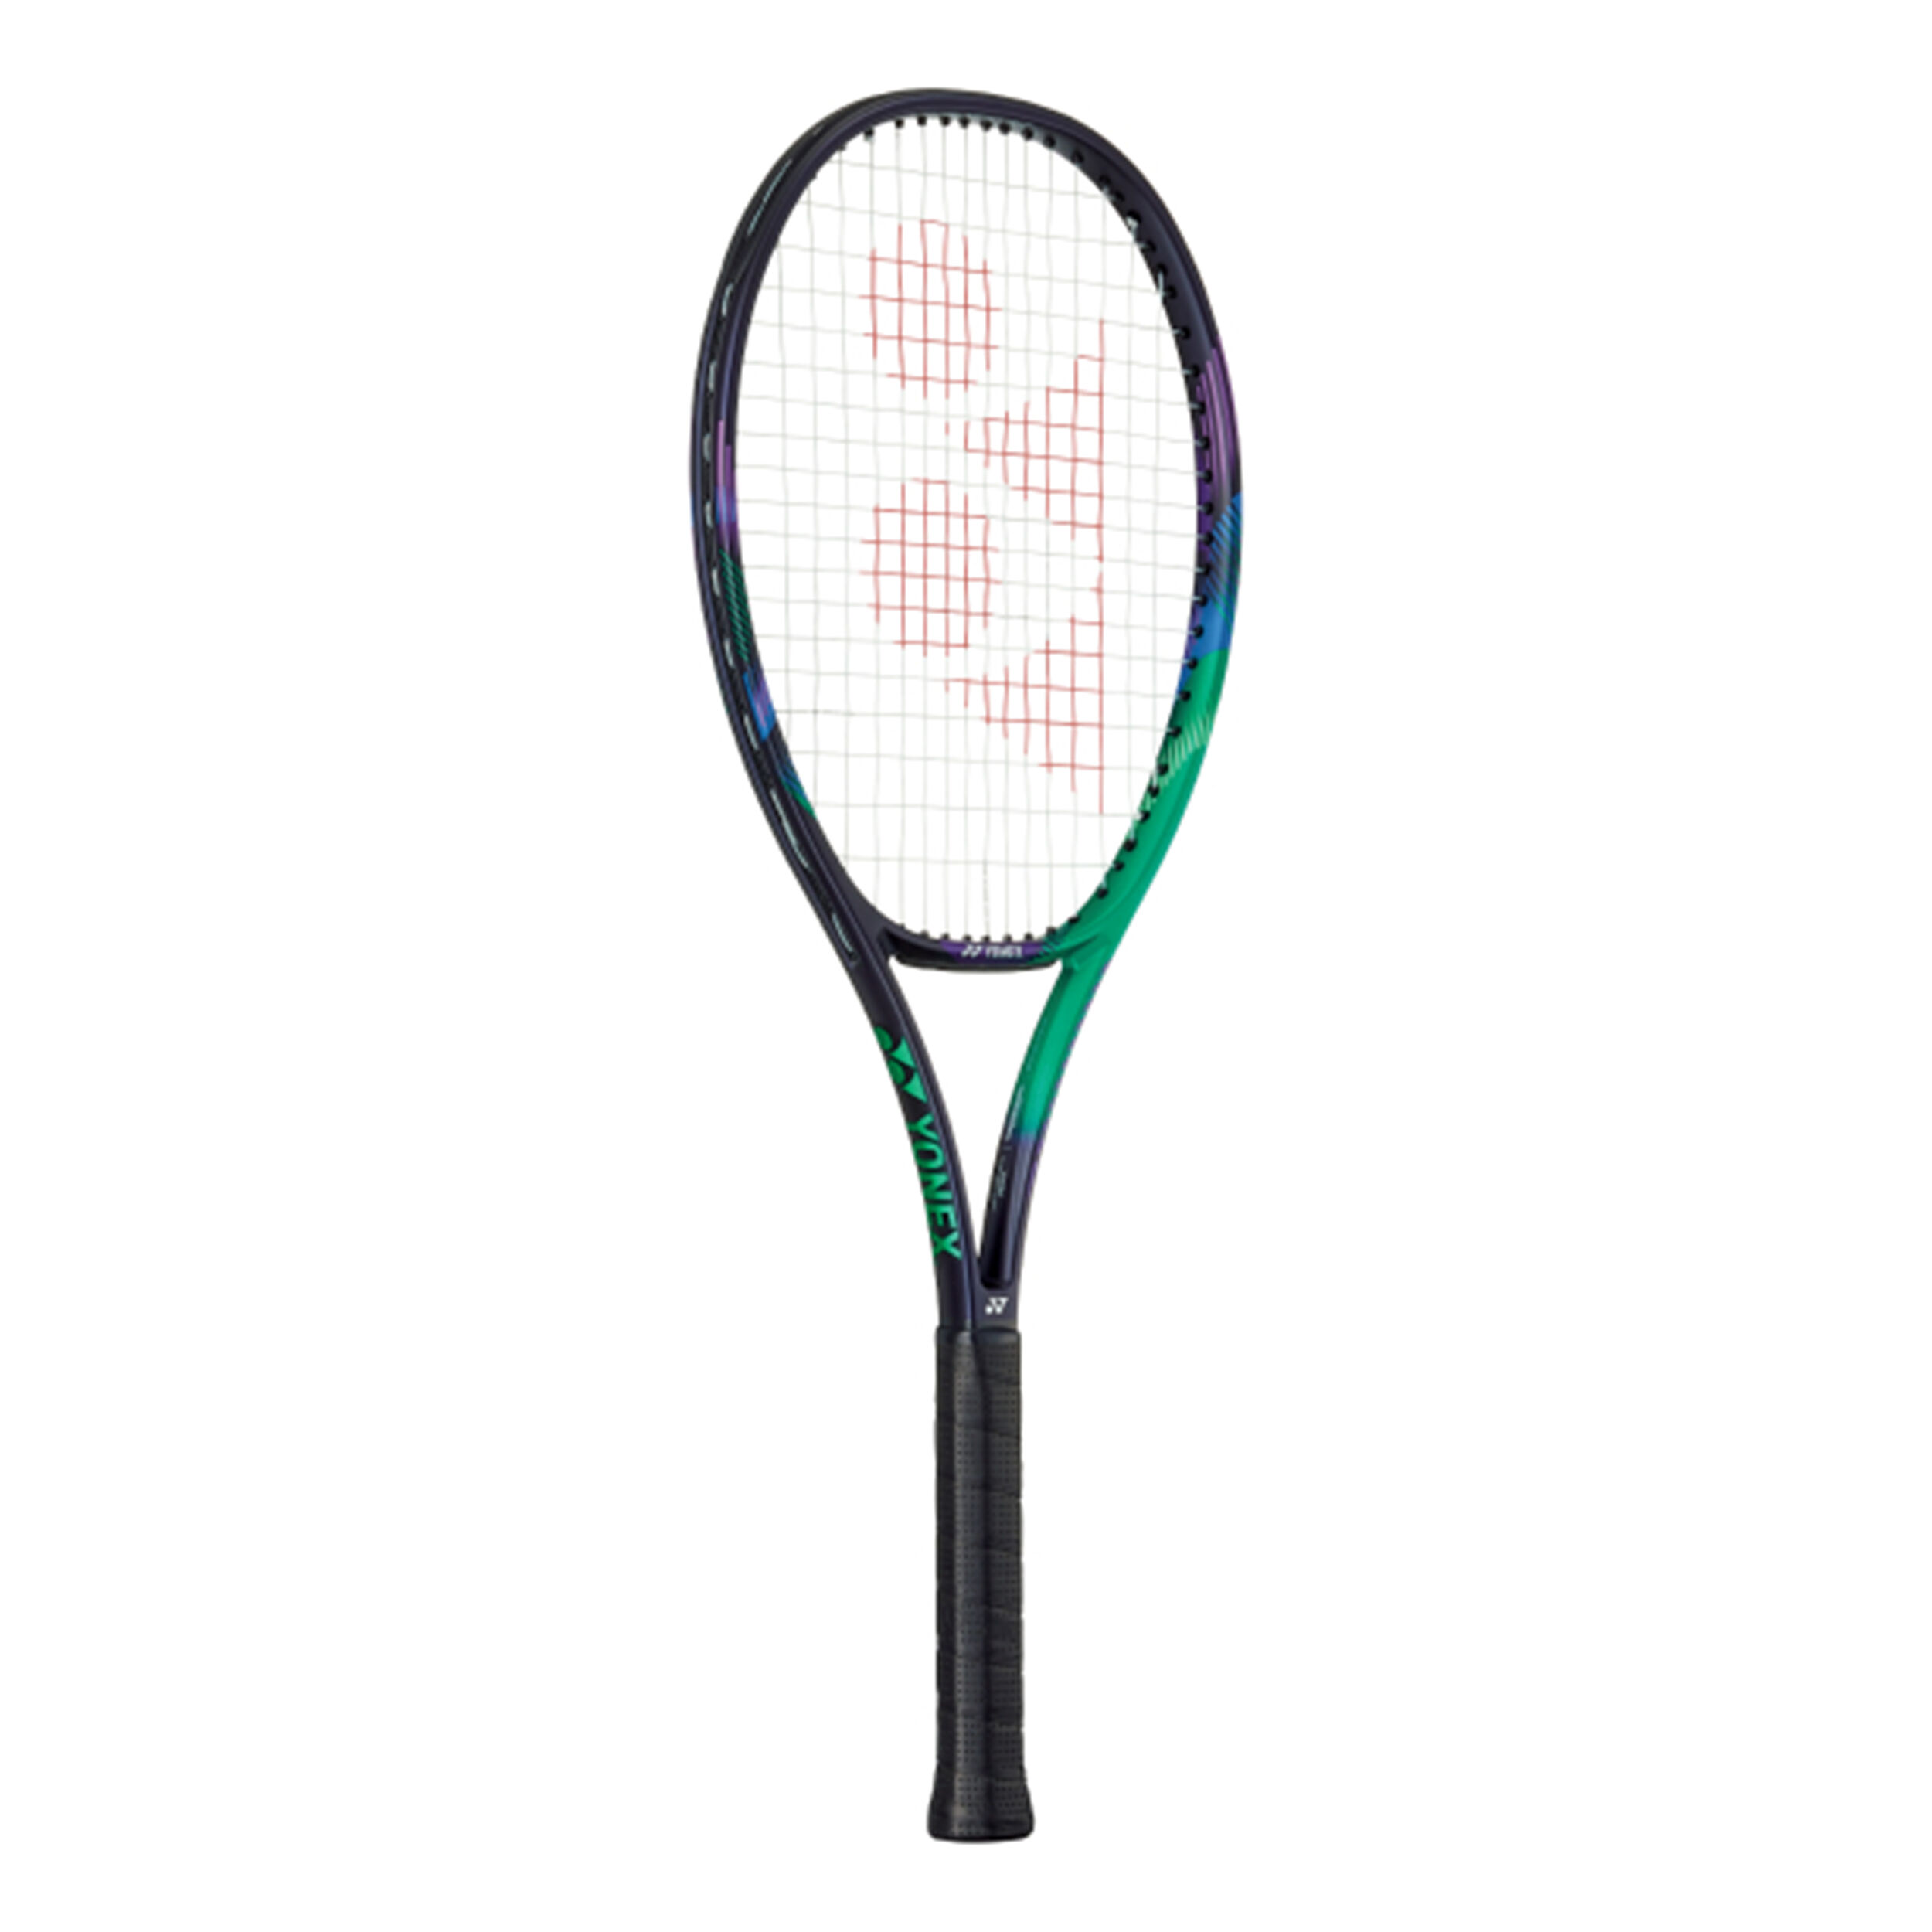 Speed Pro raqueta de tenis unbesaitet nuevo PVP 270,00 € Head graphene 360 